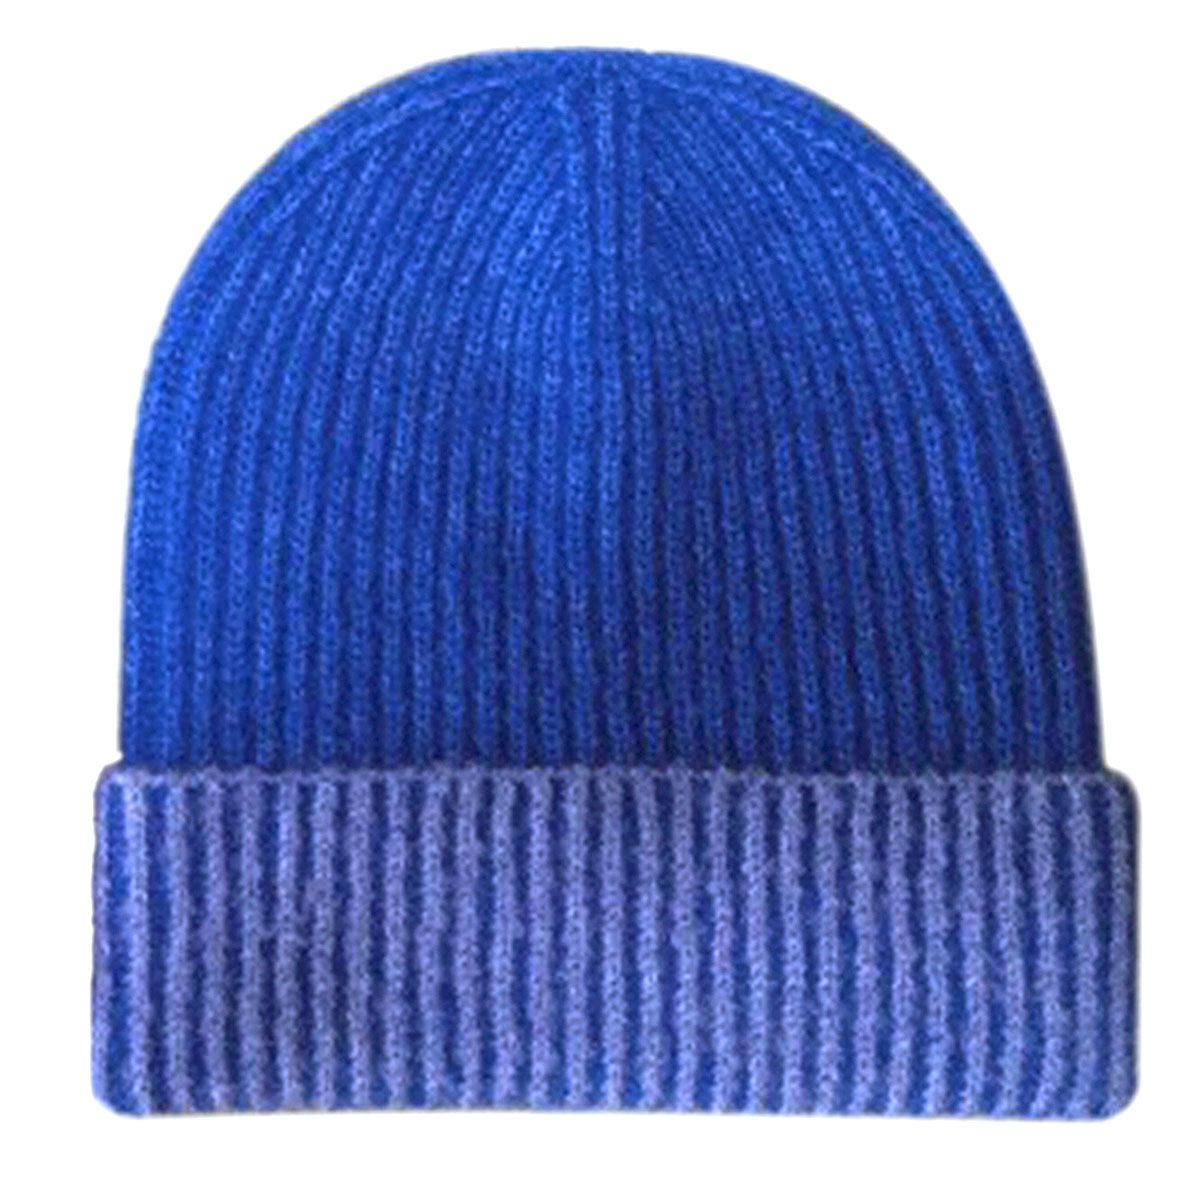 Beanie Blue Two Tone Cuffed Hat for Women